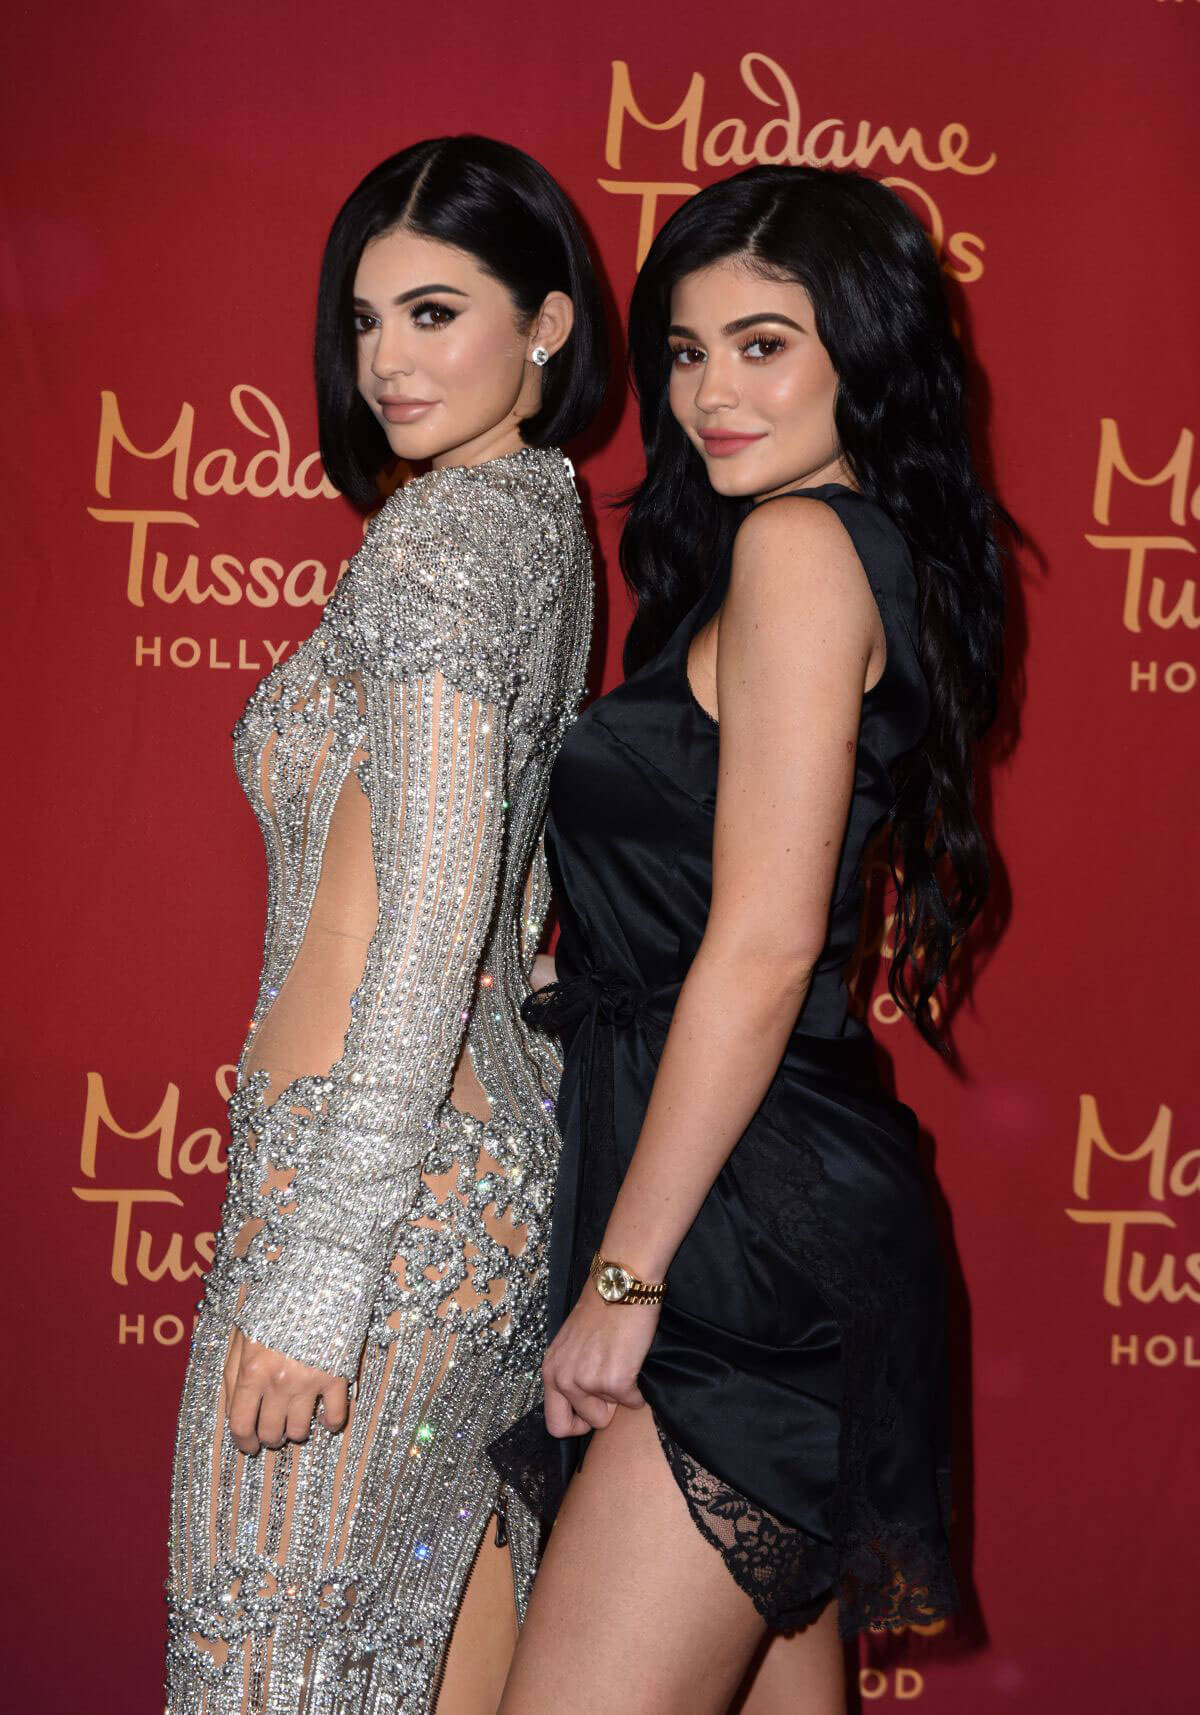 Kylie Jenner Stills Unveils Her Wax Figure at Madame Tussauds Hollywood